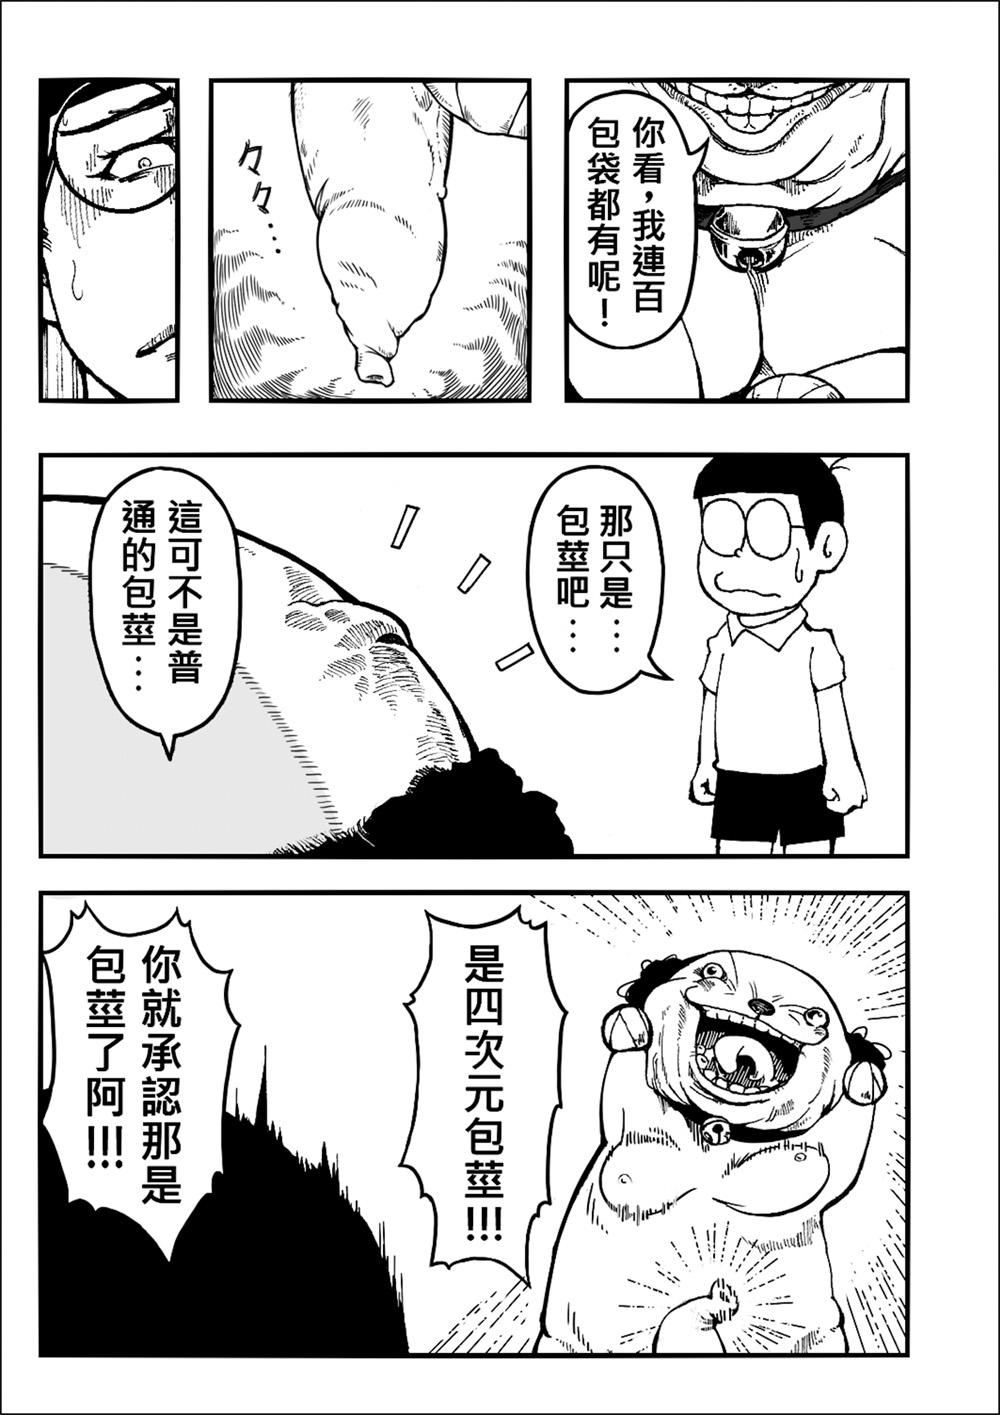 Athletic 四次元破壞者 - Doraemon Korea - Page 5